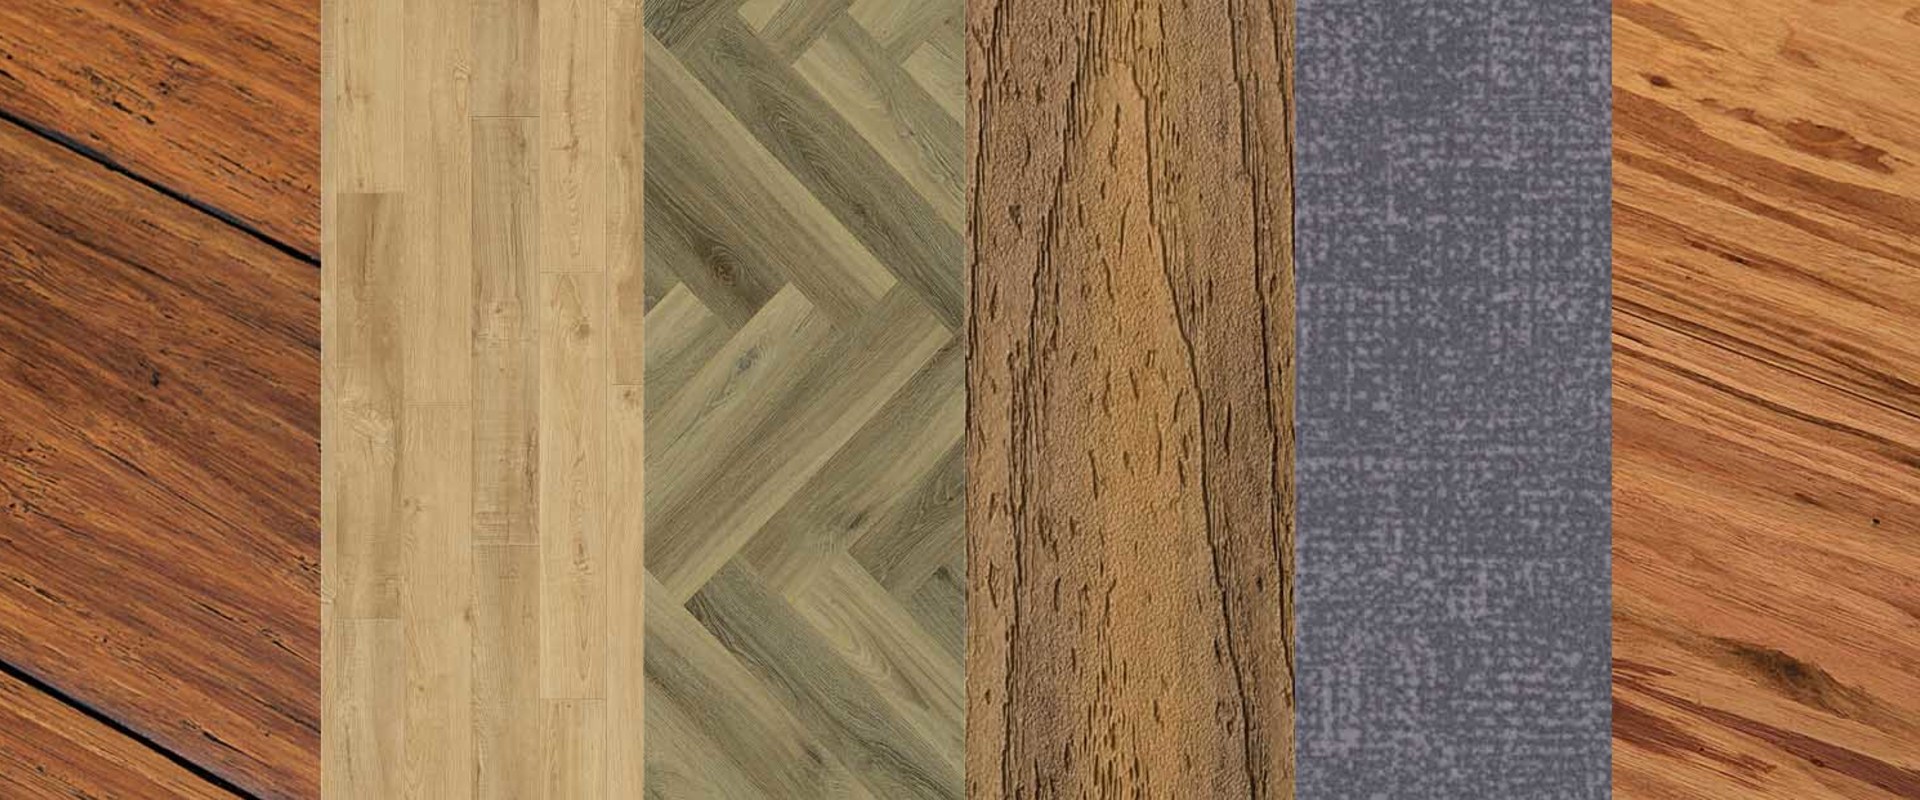 Are Hardwood Floors Eco-Friendly?